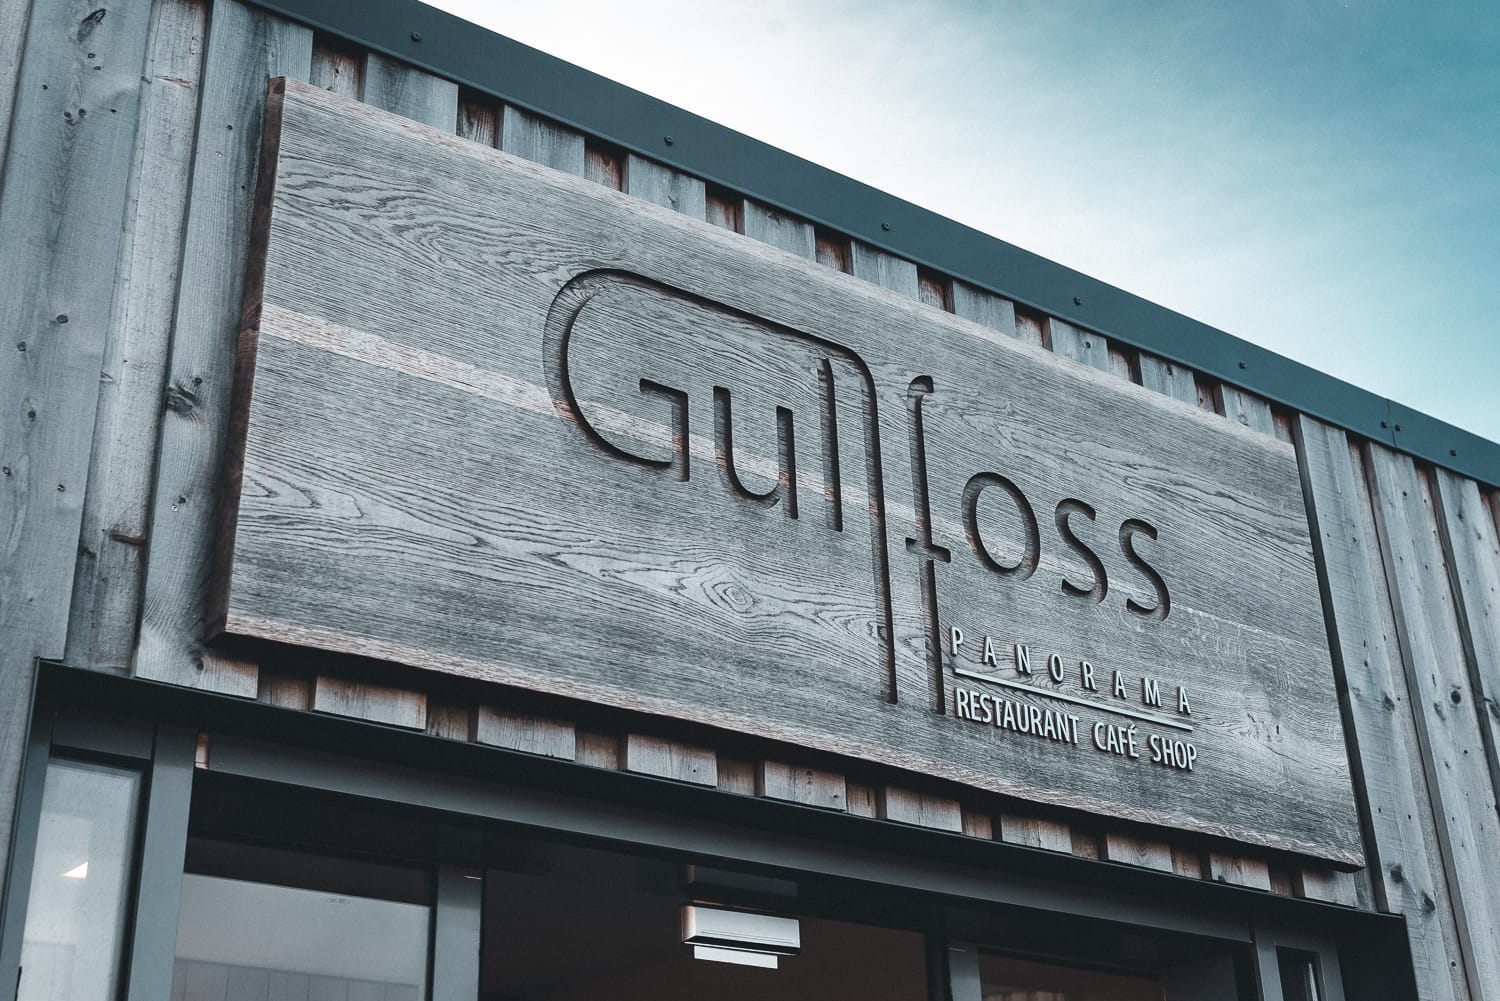 Gullfoss Panorama Restaurant and shop